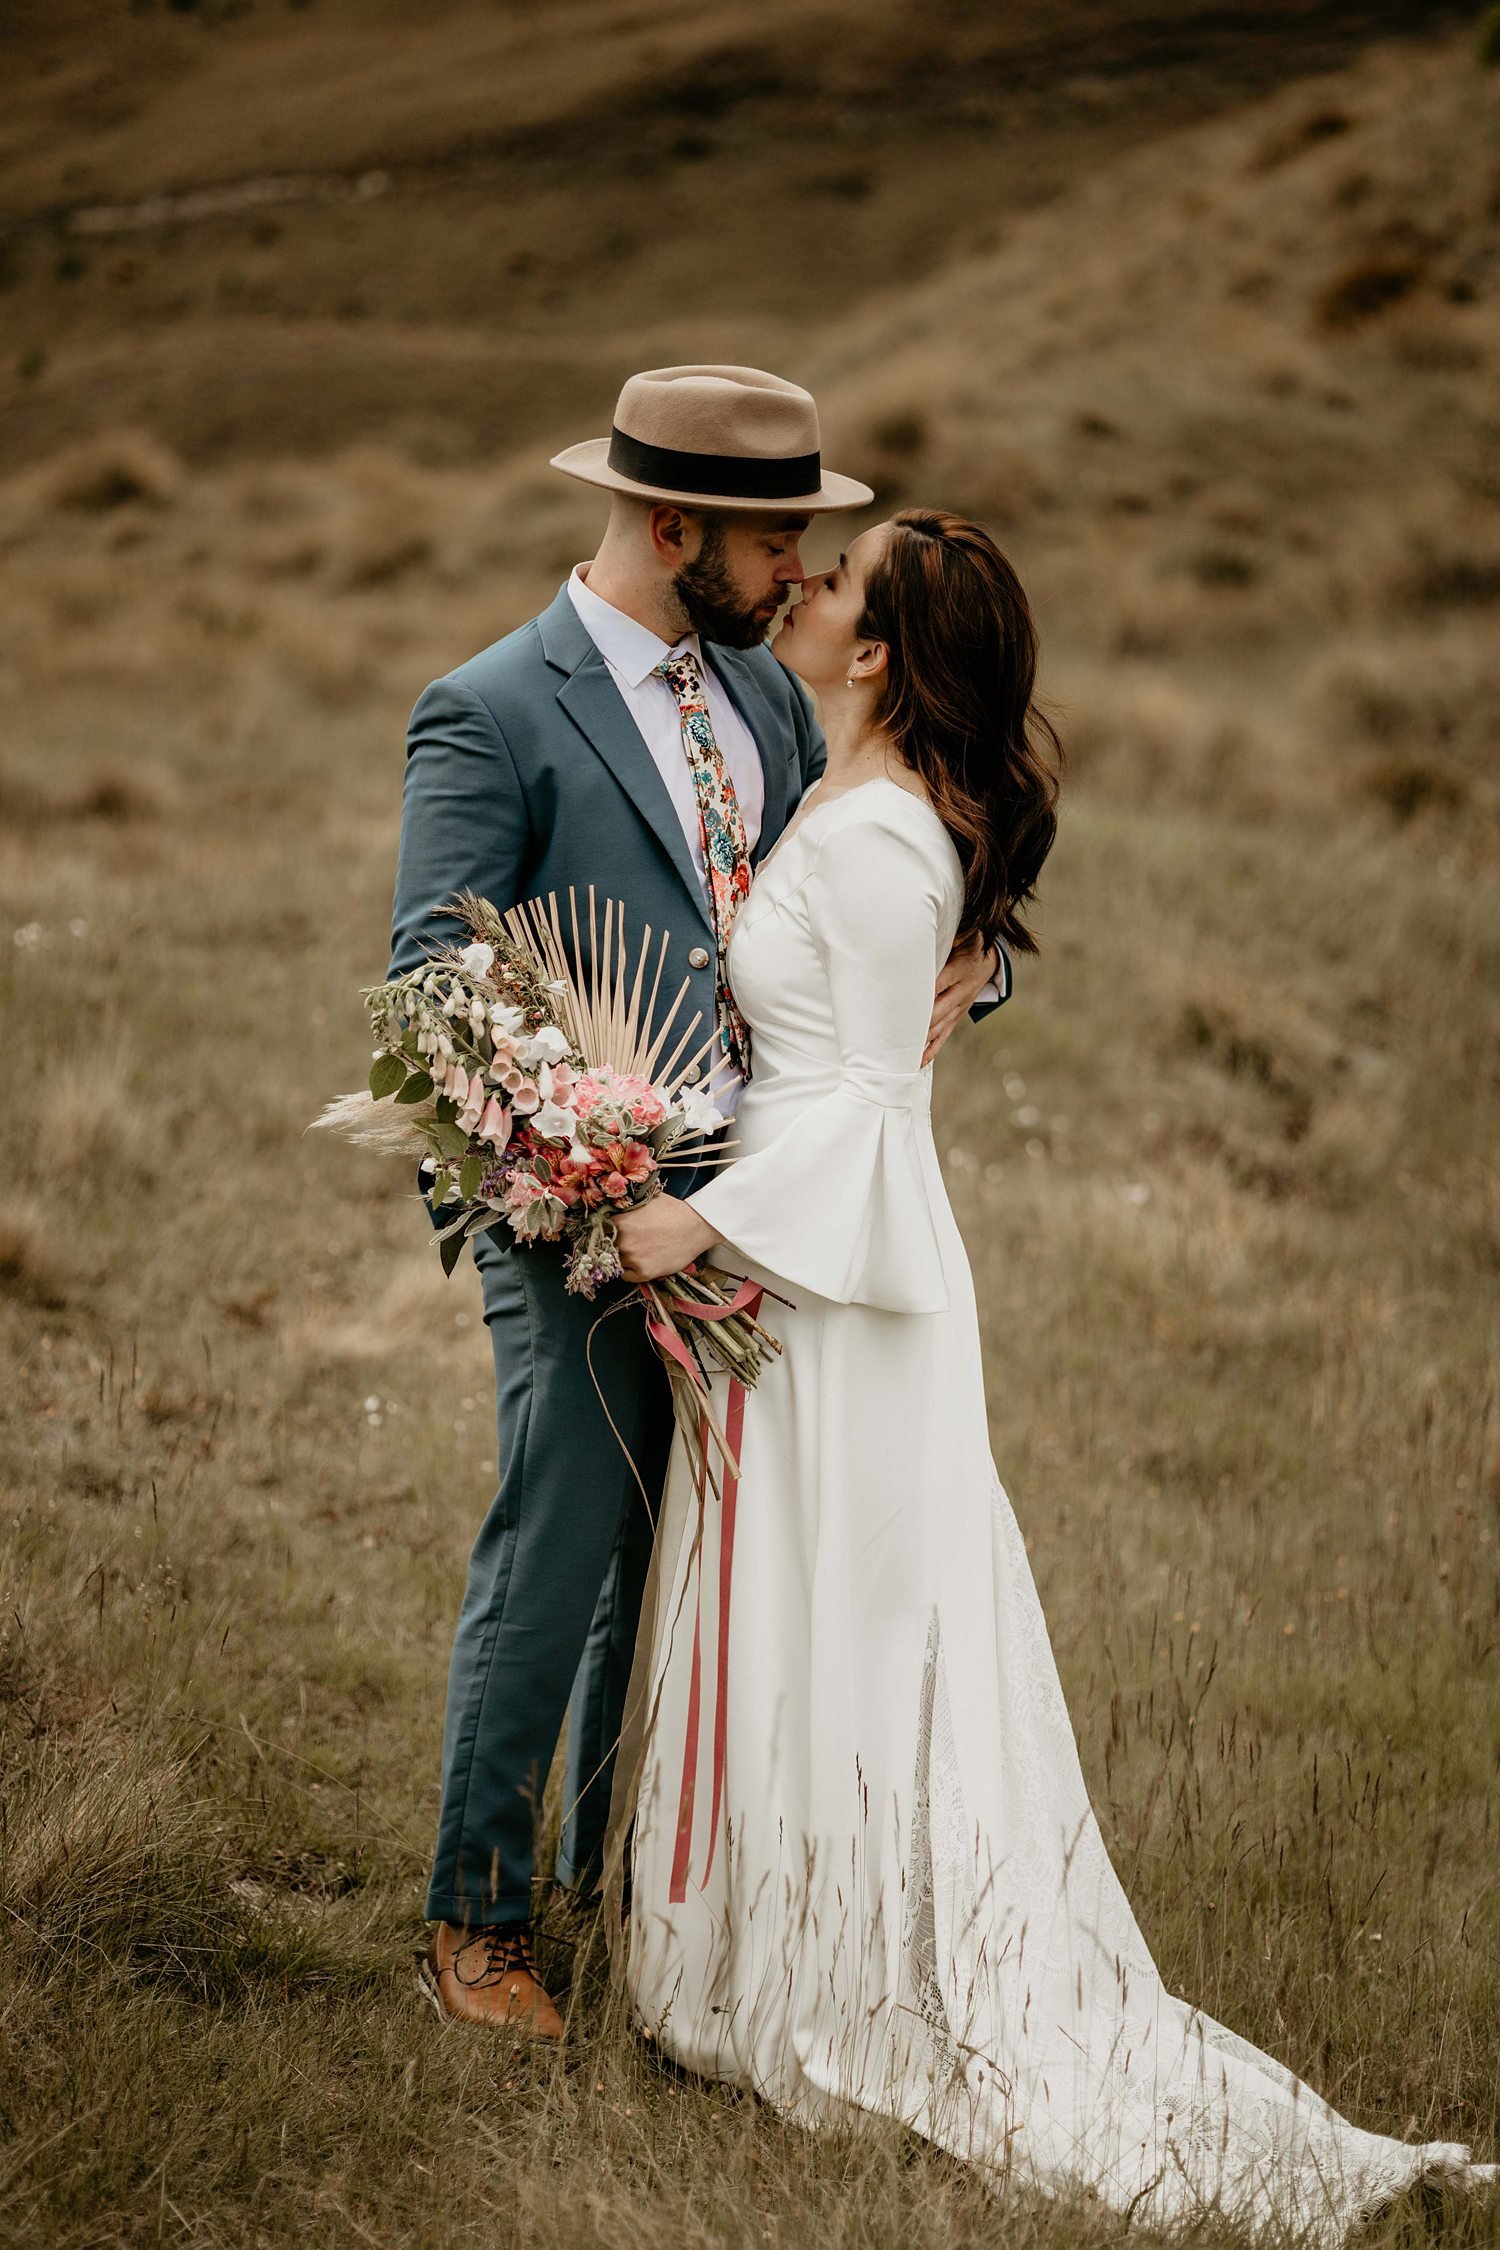 Ollie & Ritz |Panda Bay Films Wedding Photographer Queenstown New Zealand  Elopement Pre Wedding and Heli-Wedding Photography_-116.jpg